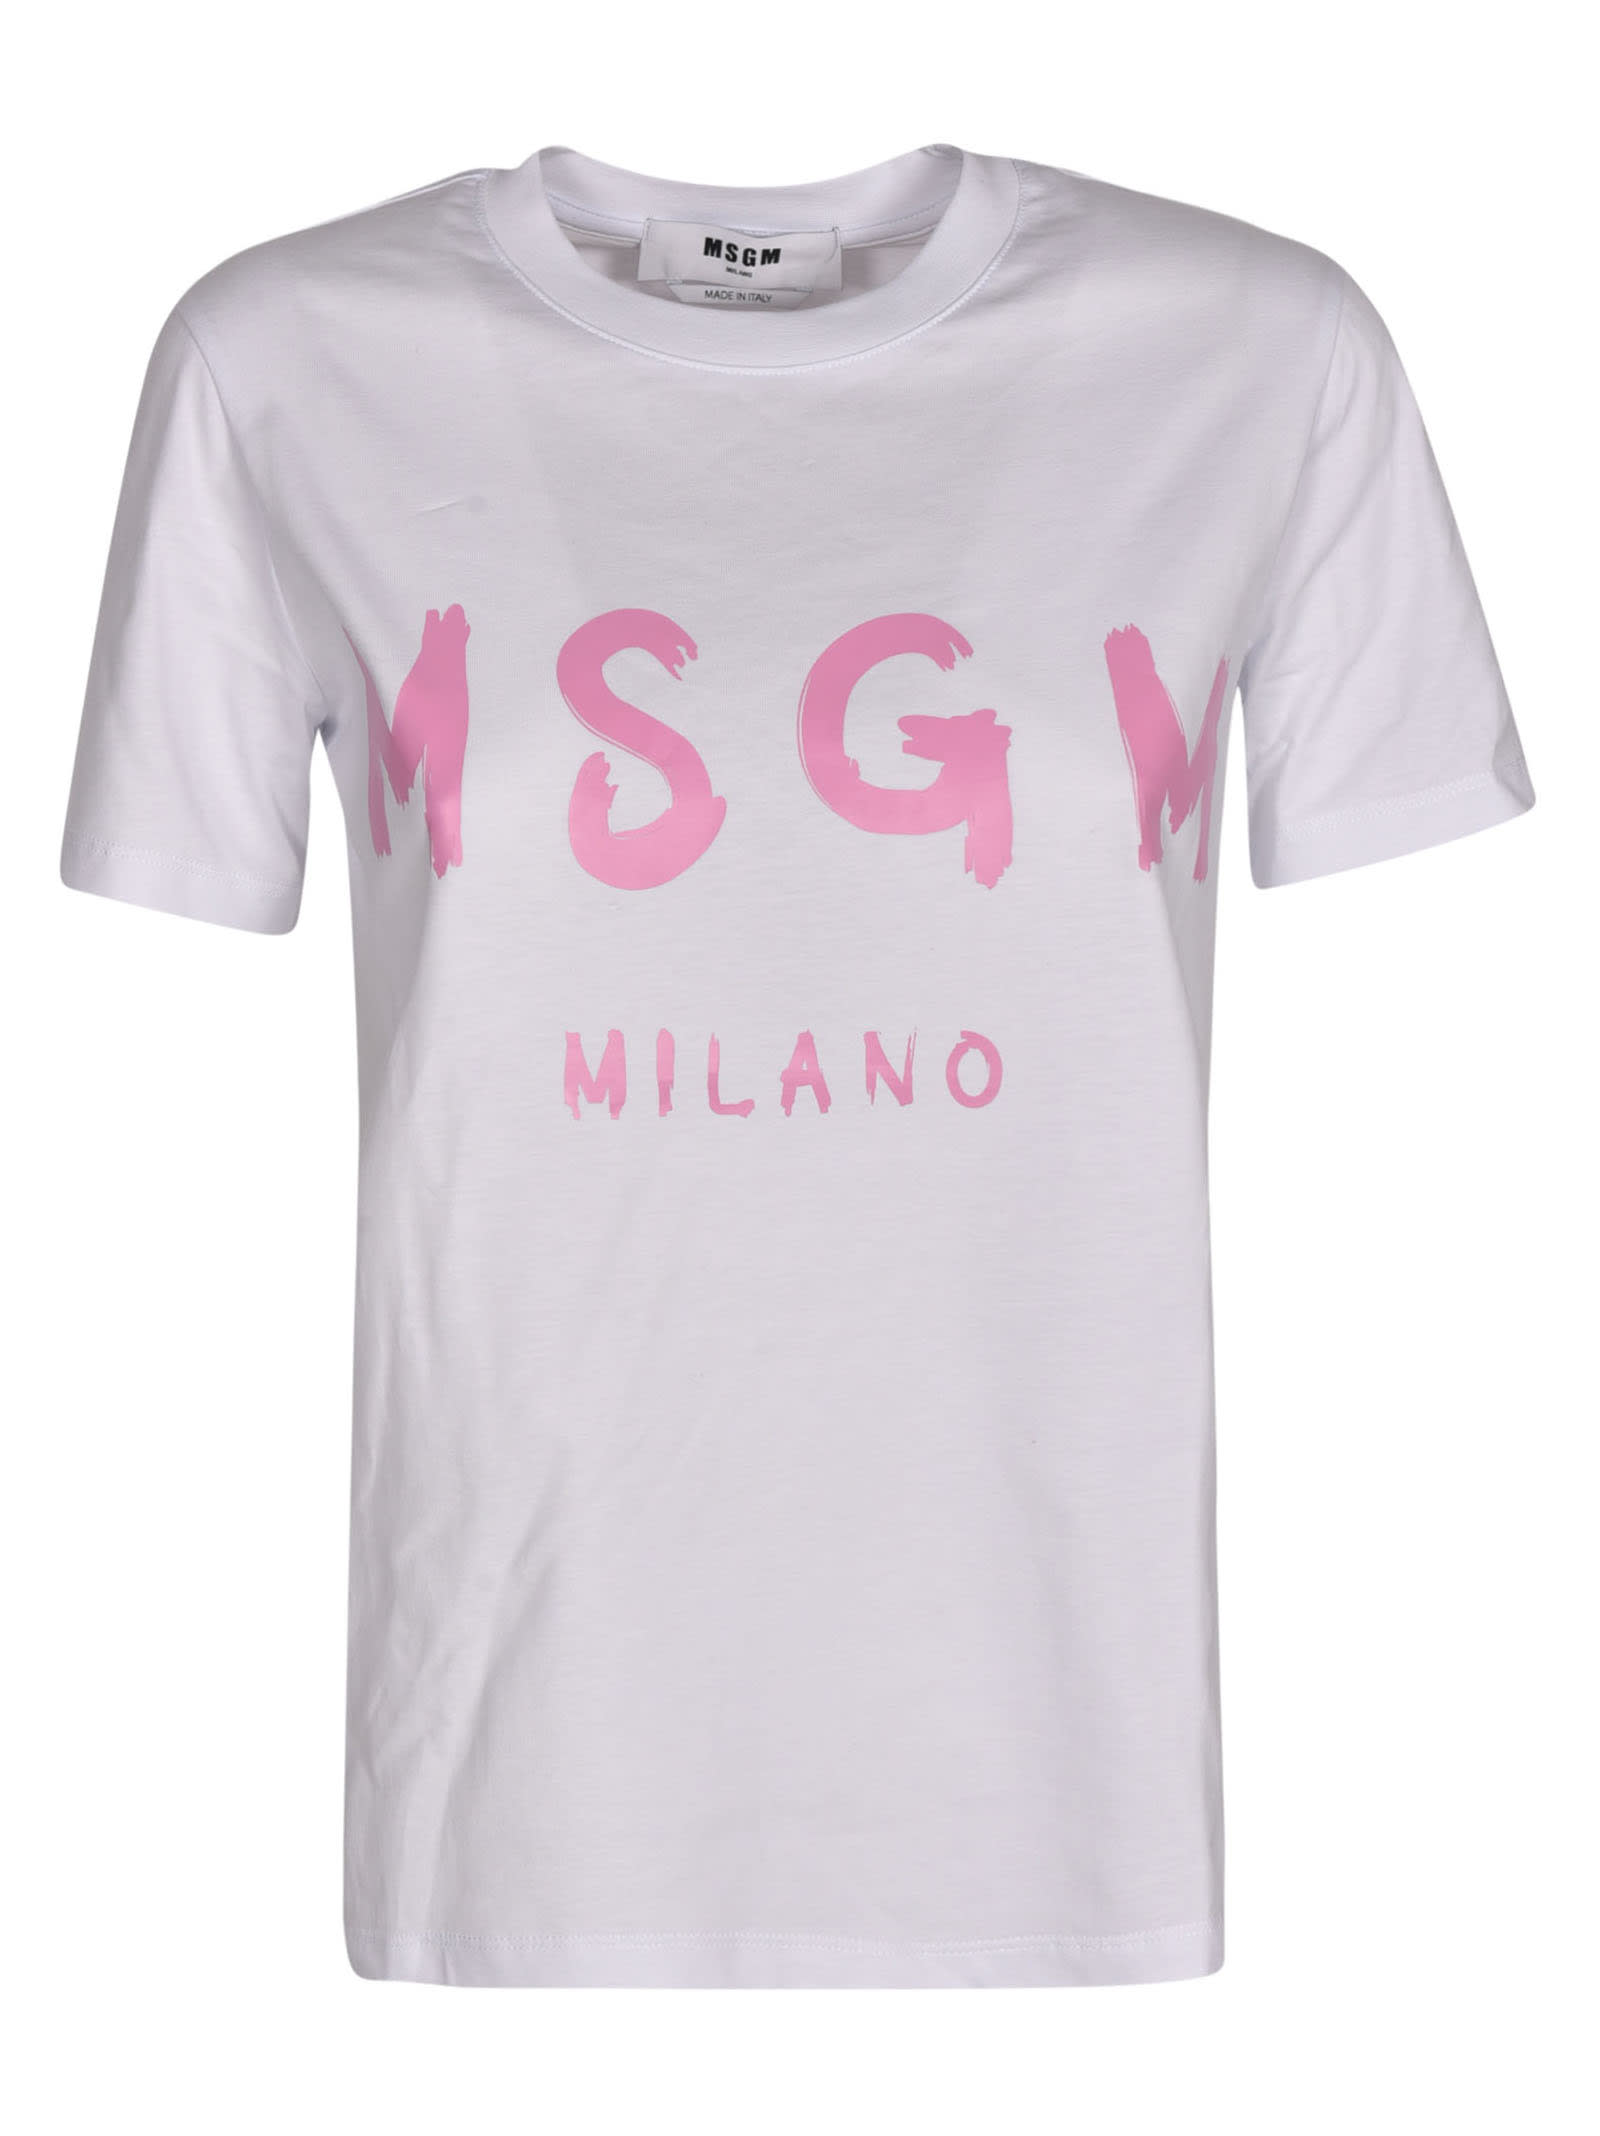 MSGM T-shirts MILANO LOGO T-SHIRT